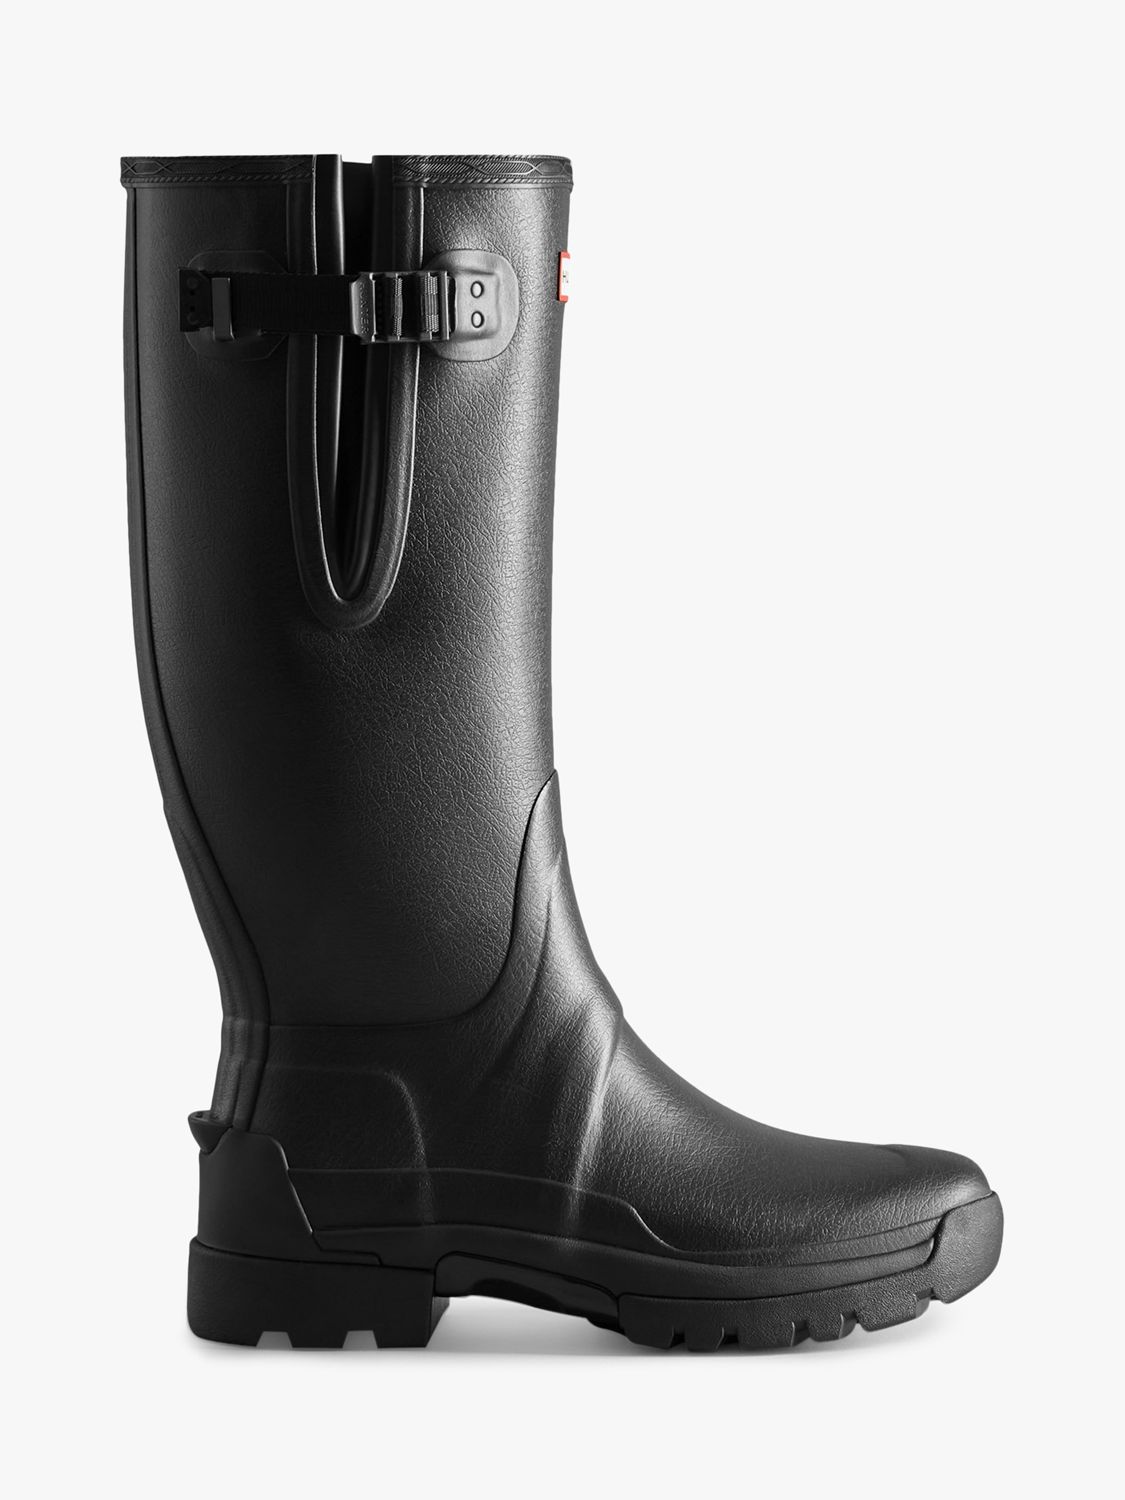 Hunter Men's Balmoral Adjustable Wellington Boots, Black, 7